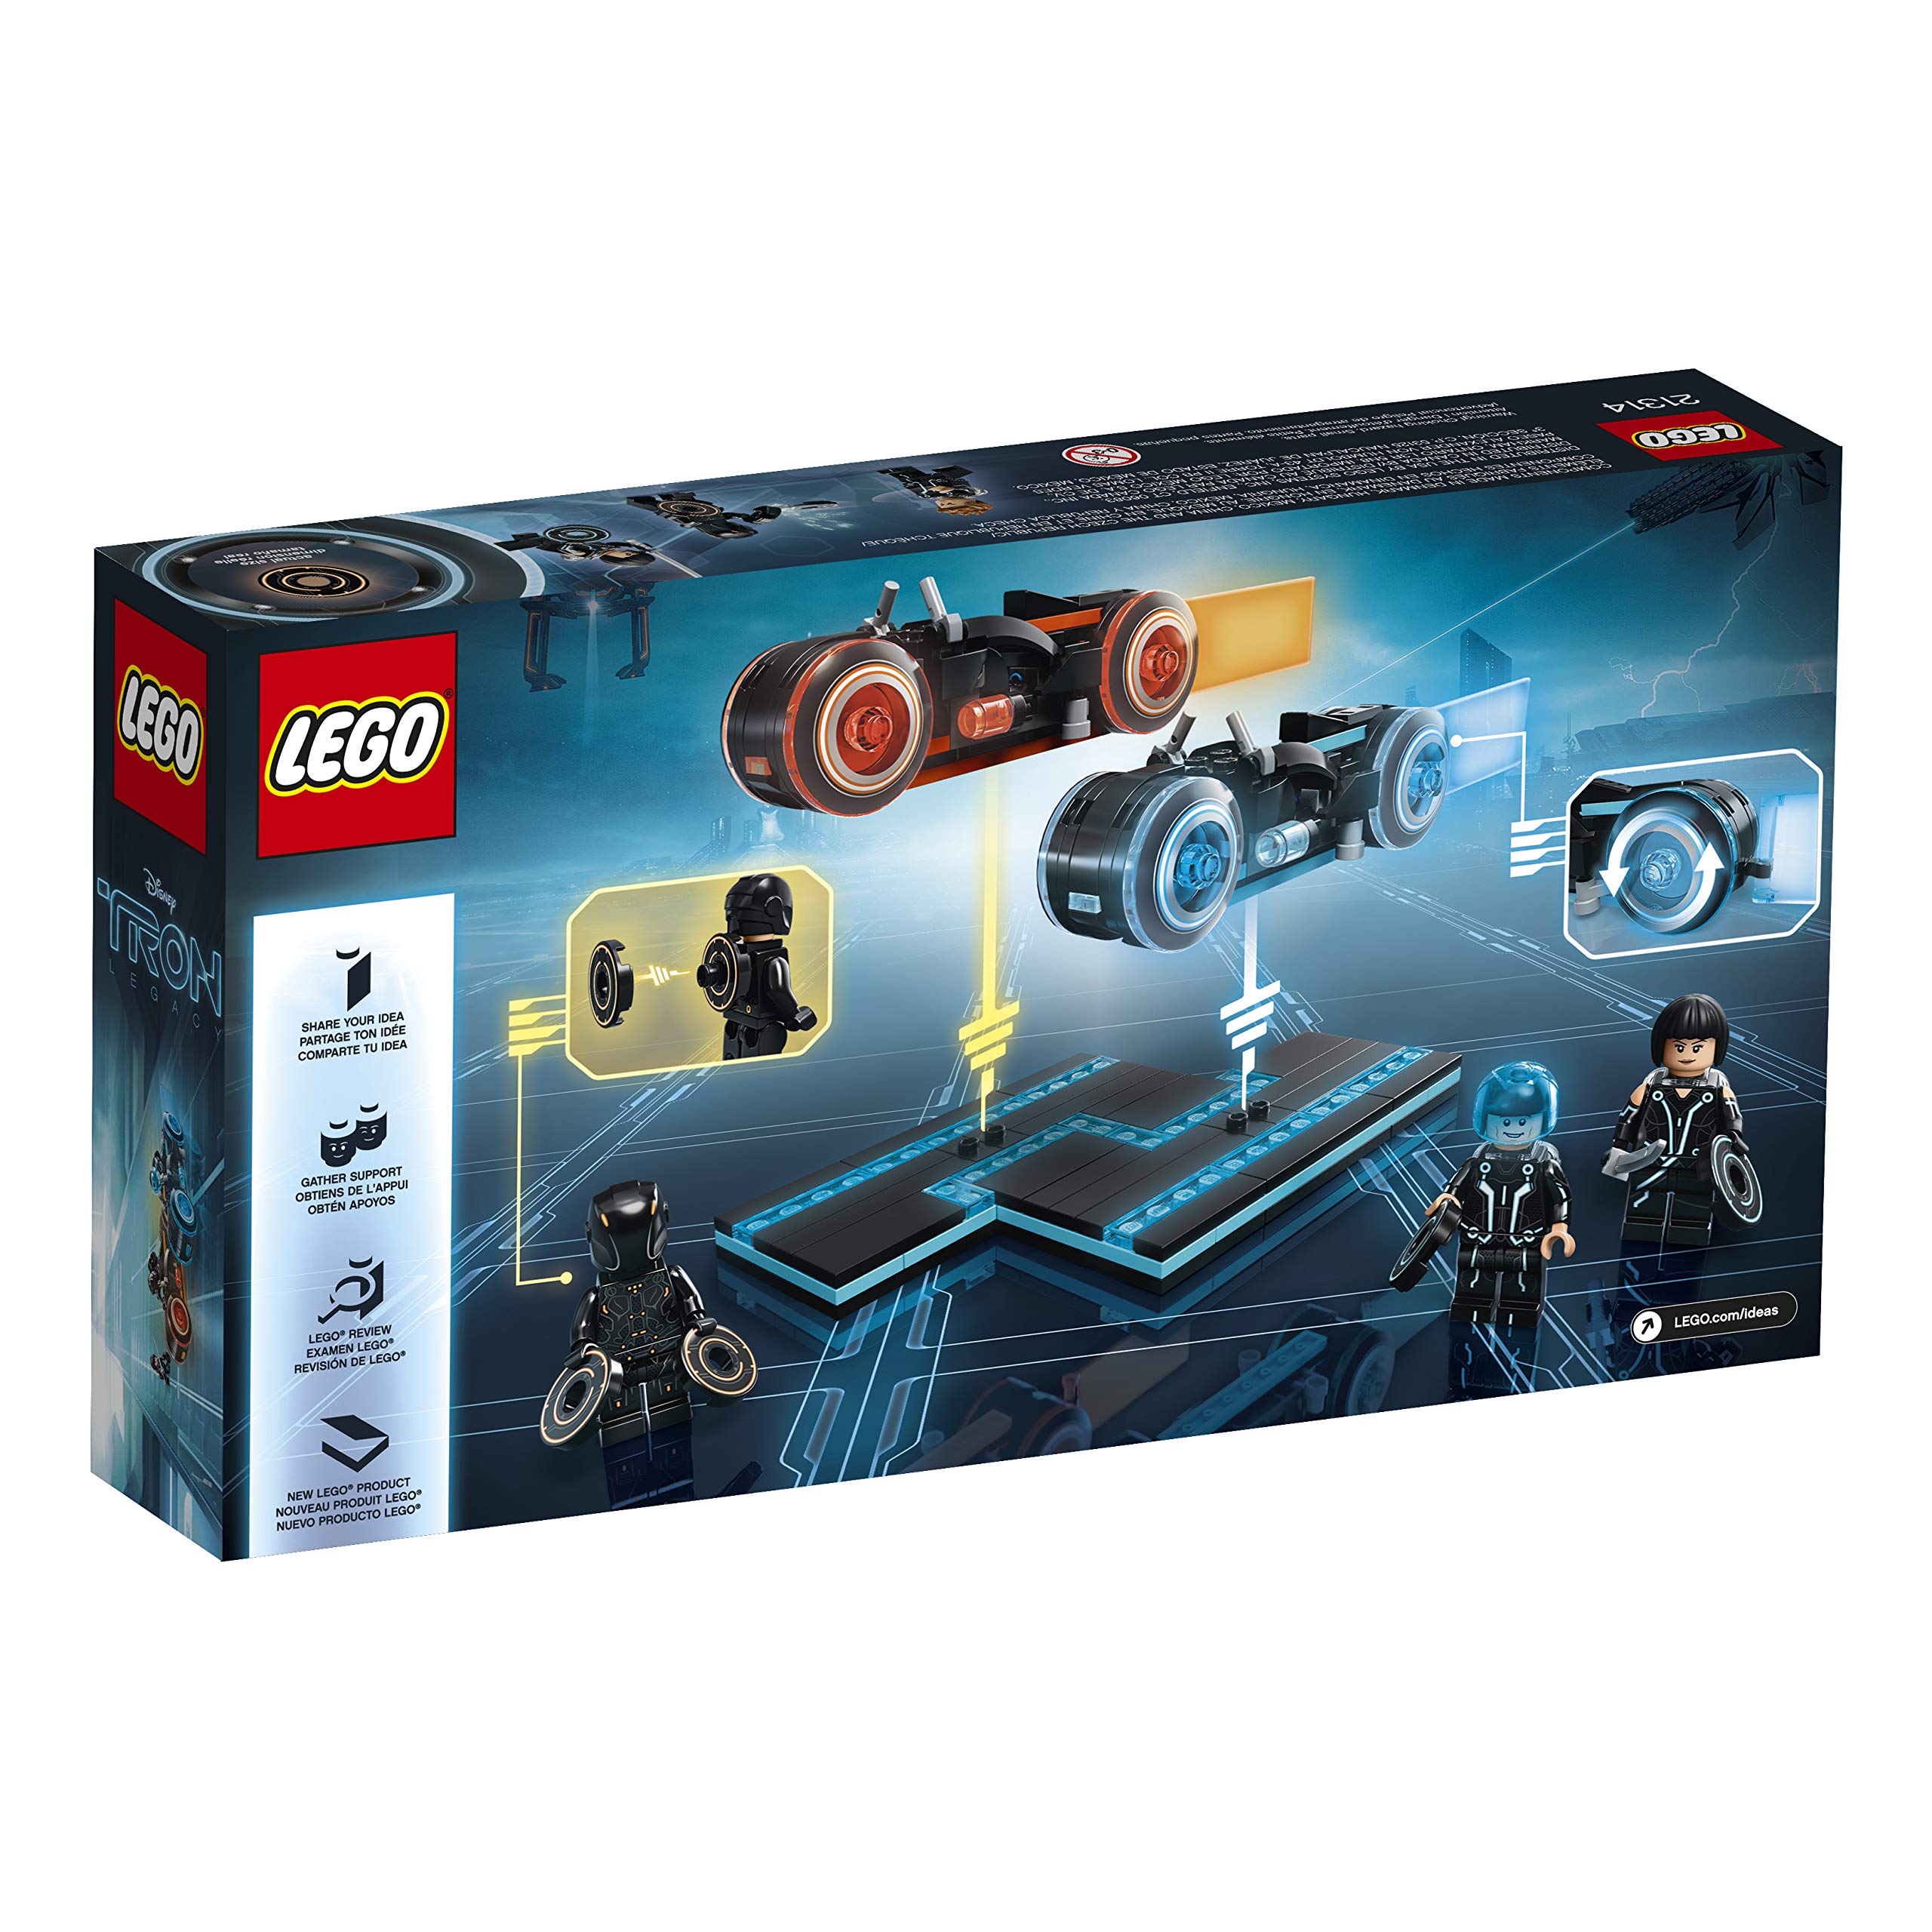 LEGO Ideas Tron Legacy Light Cycles 21314 Building Kit (230 Piece)